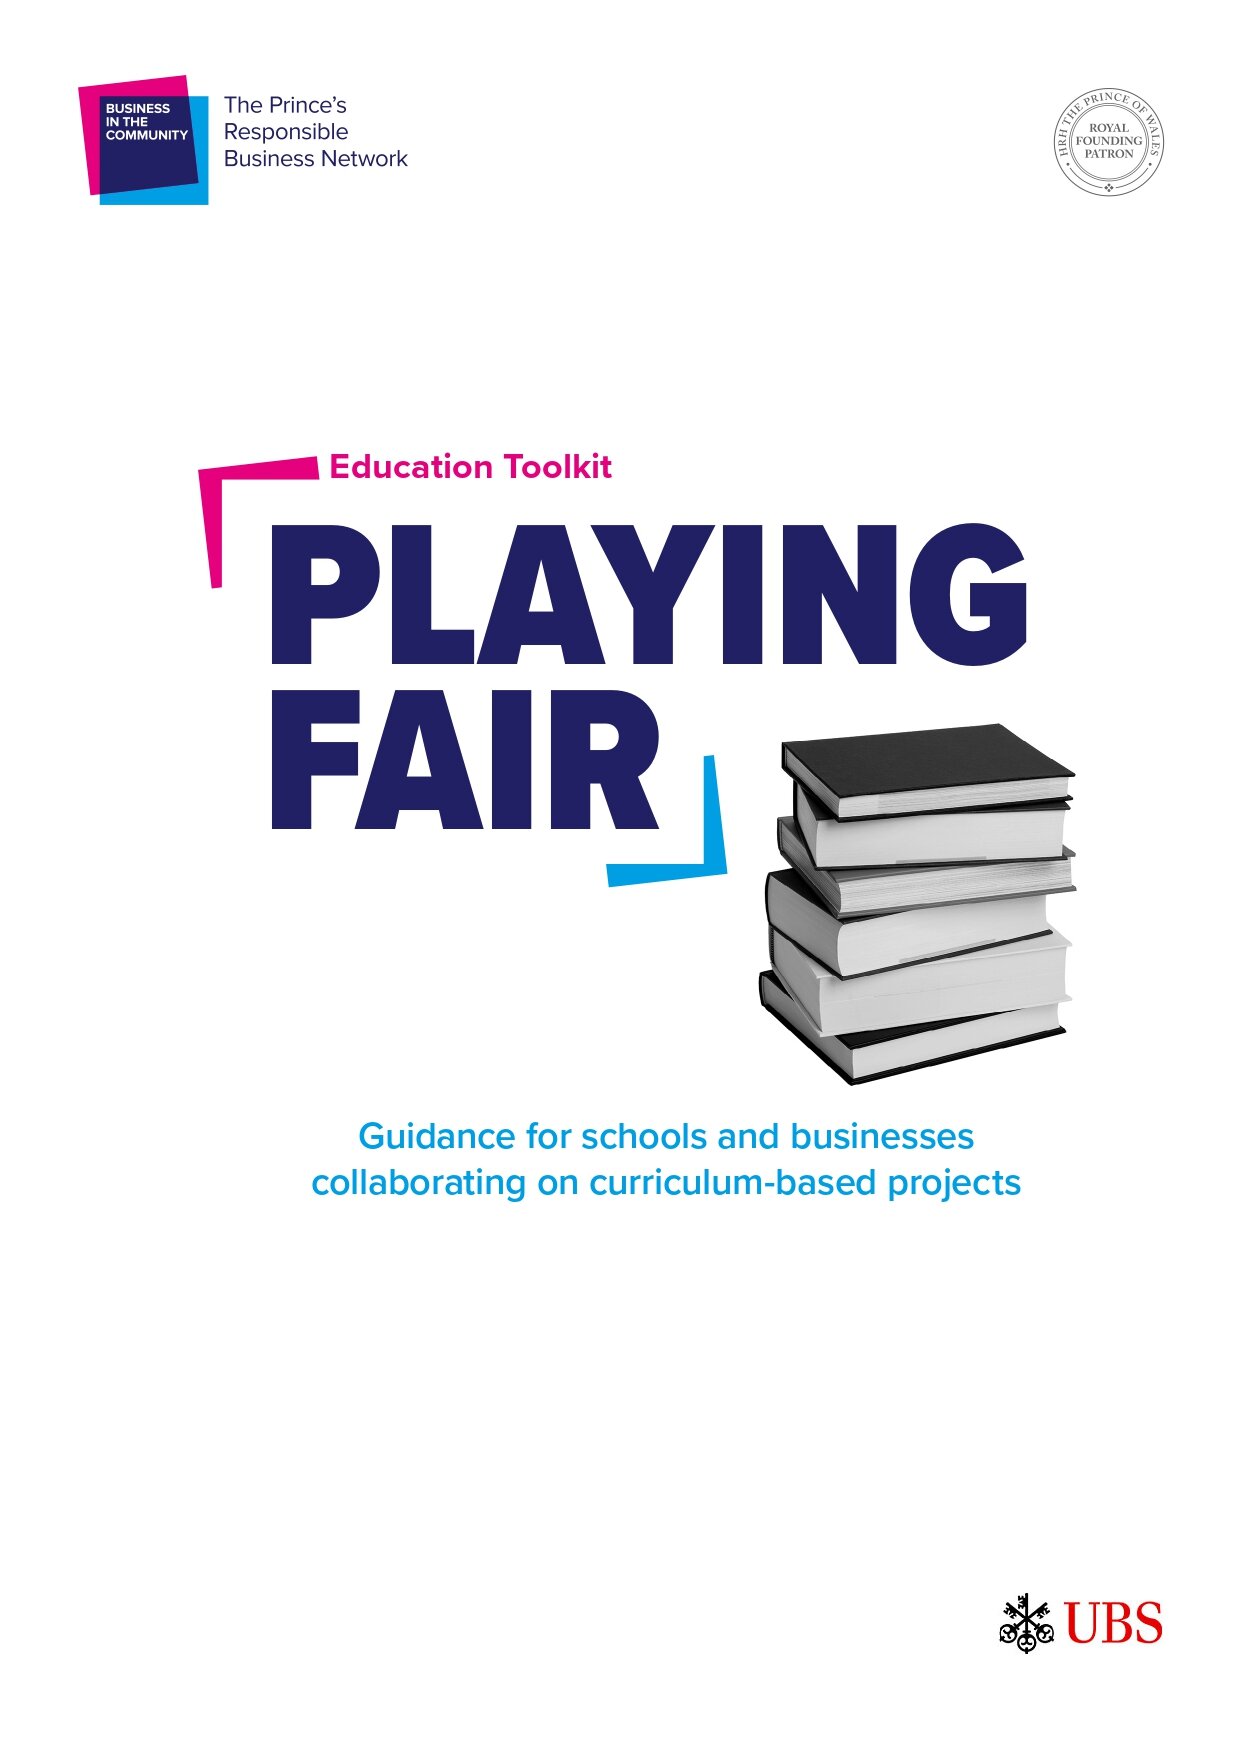 bitc-education-toolkit-playingfairguidanceschoolsbusinessescollaboratingcurriculumprojects-may2019_page-0001.jpg